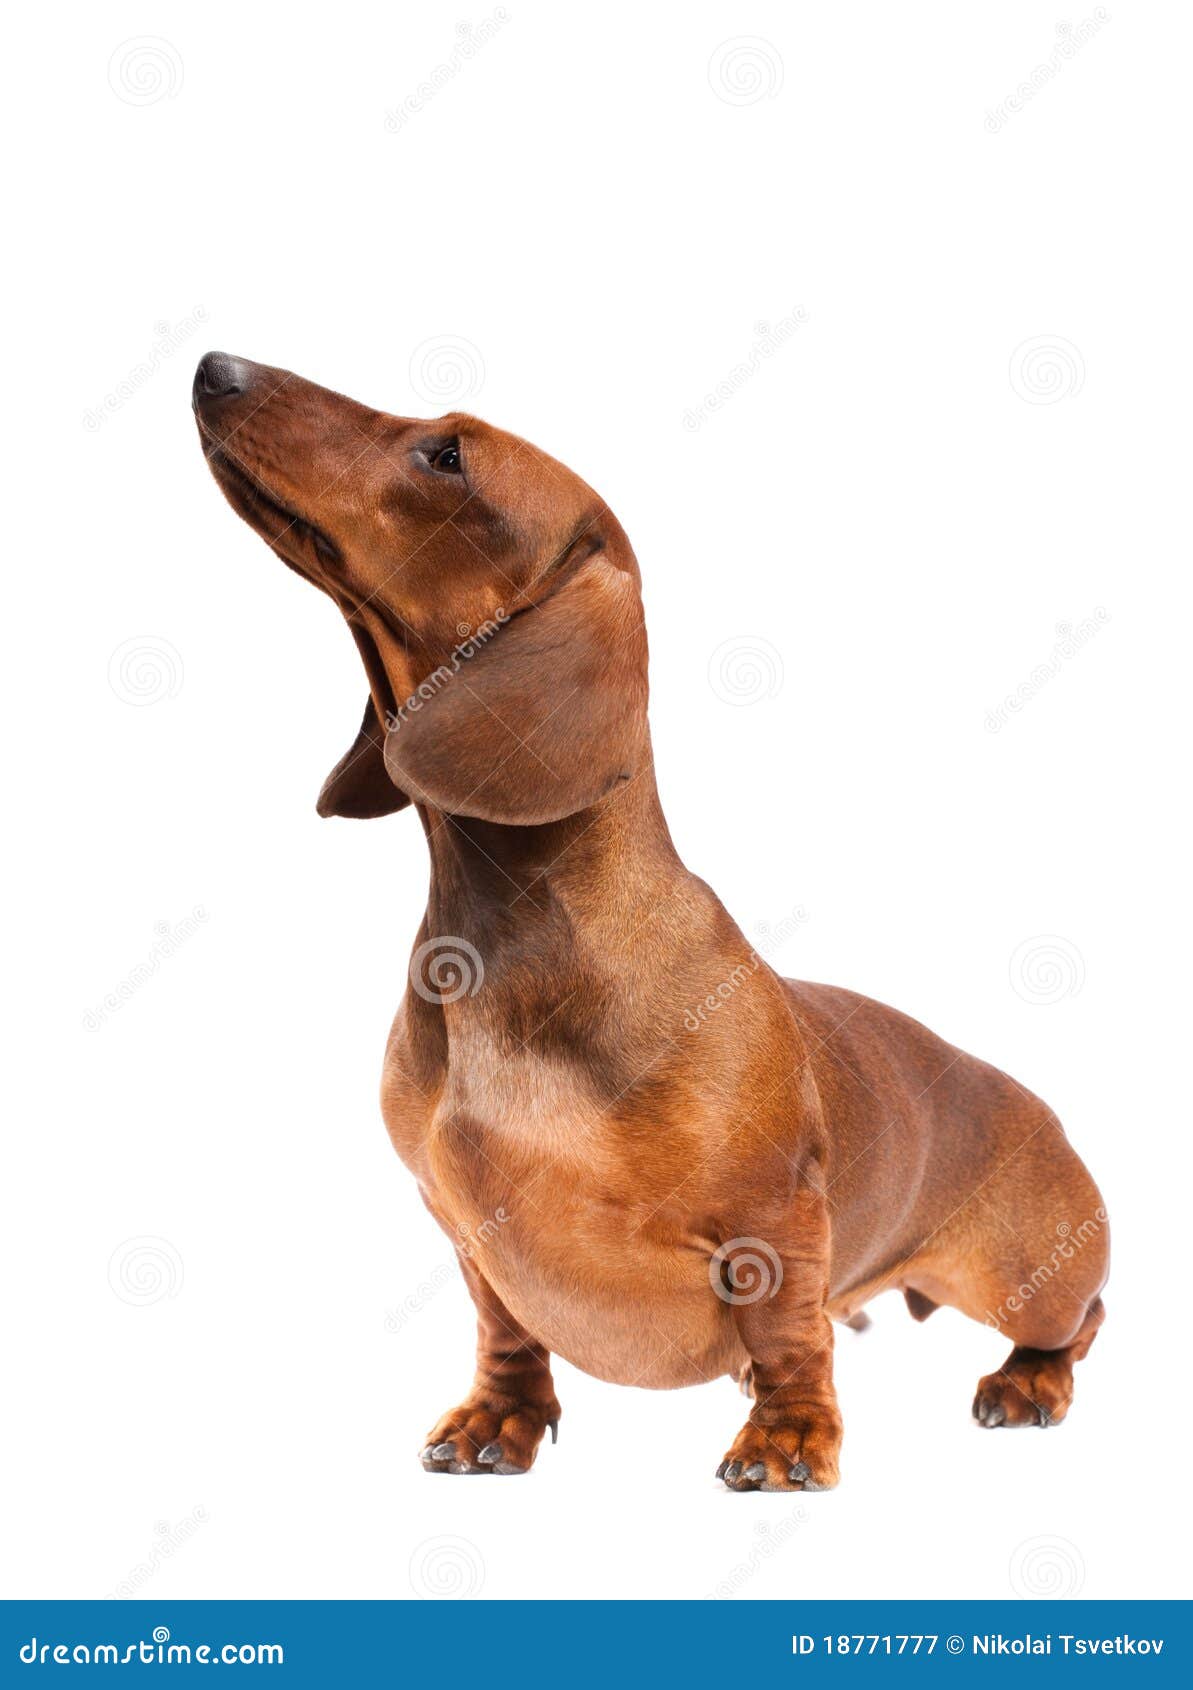 dachshund dog clipart - photo #38